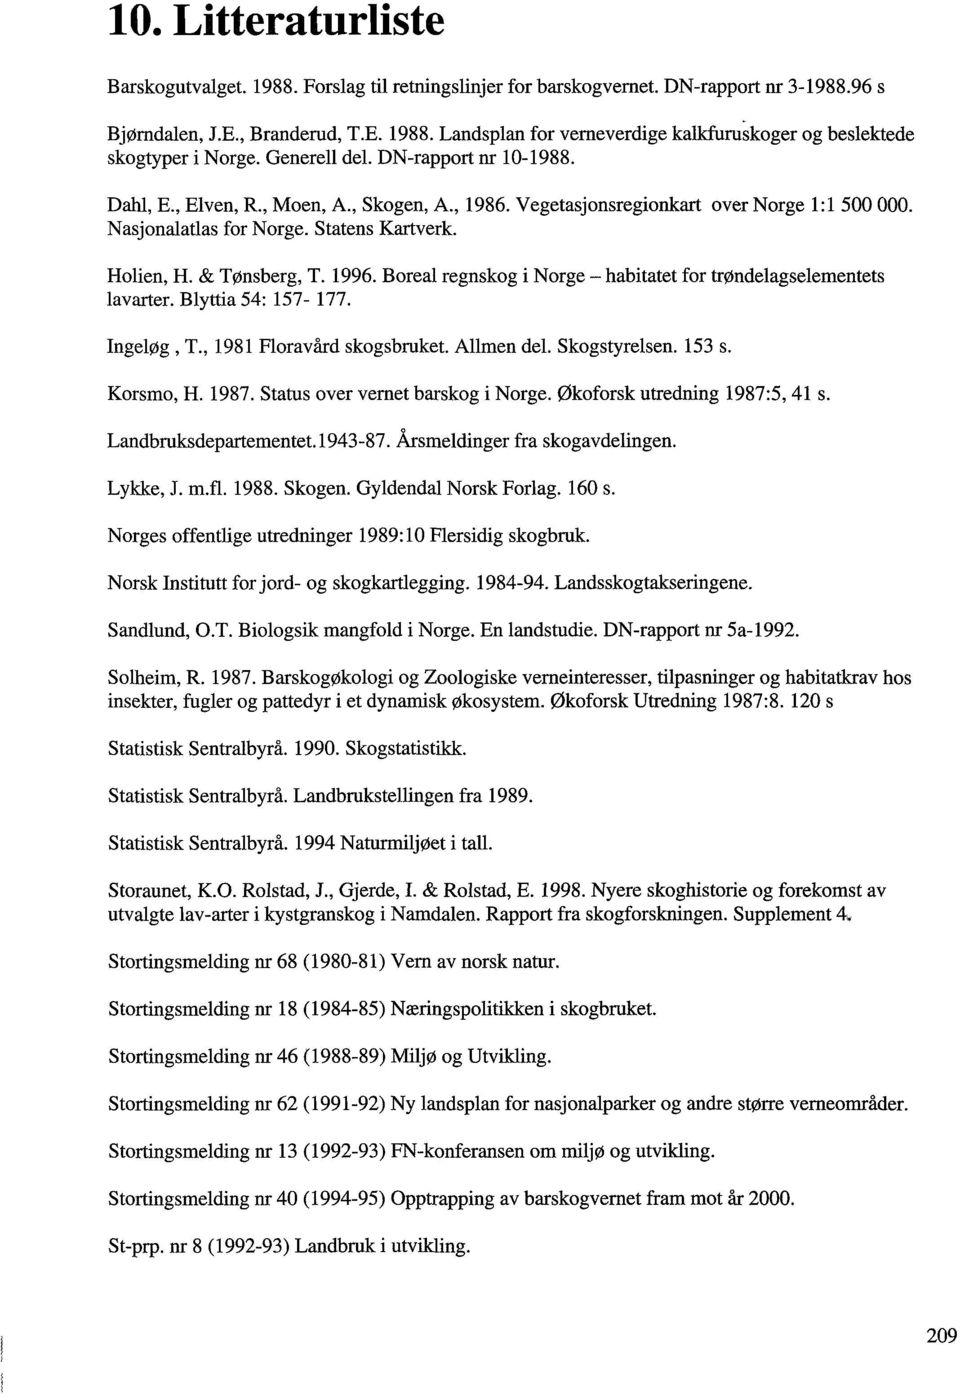 1996. Boreal regnskog i Norge - habitatet for trøndelagselementets lavarter. Blyttia 54: 157-177. ngeløg, T., 1981 Floravård skogsbruket. Allmen del. Skogstyrelsen. 153 s. Korsmo, H. 1987.